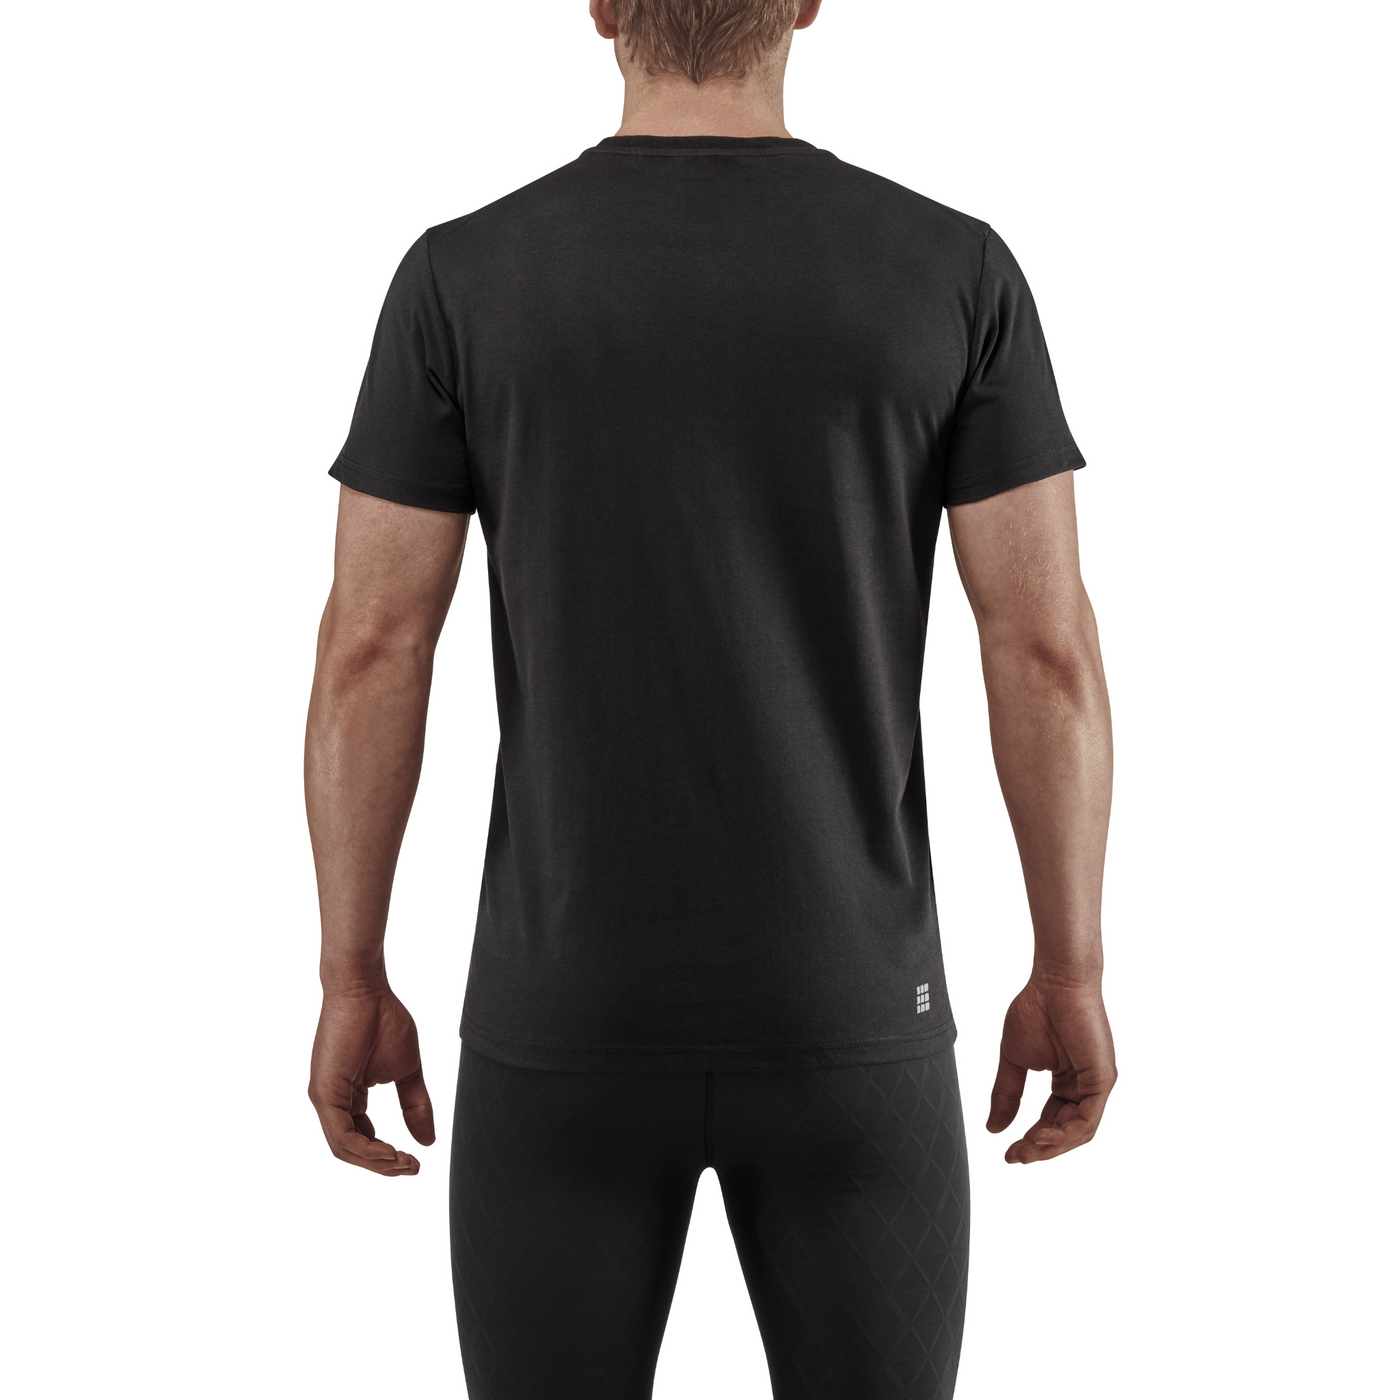 Crew Short Sleeve Shirt, Men, Black, Back-View Model